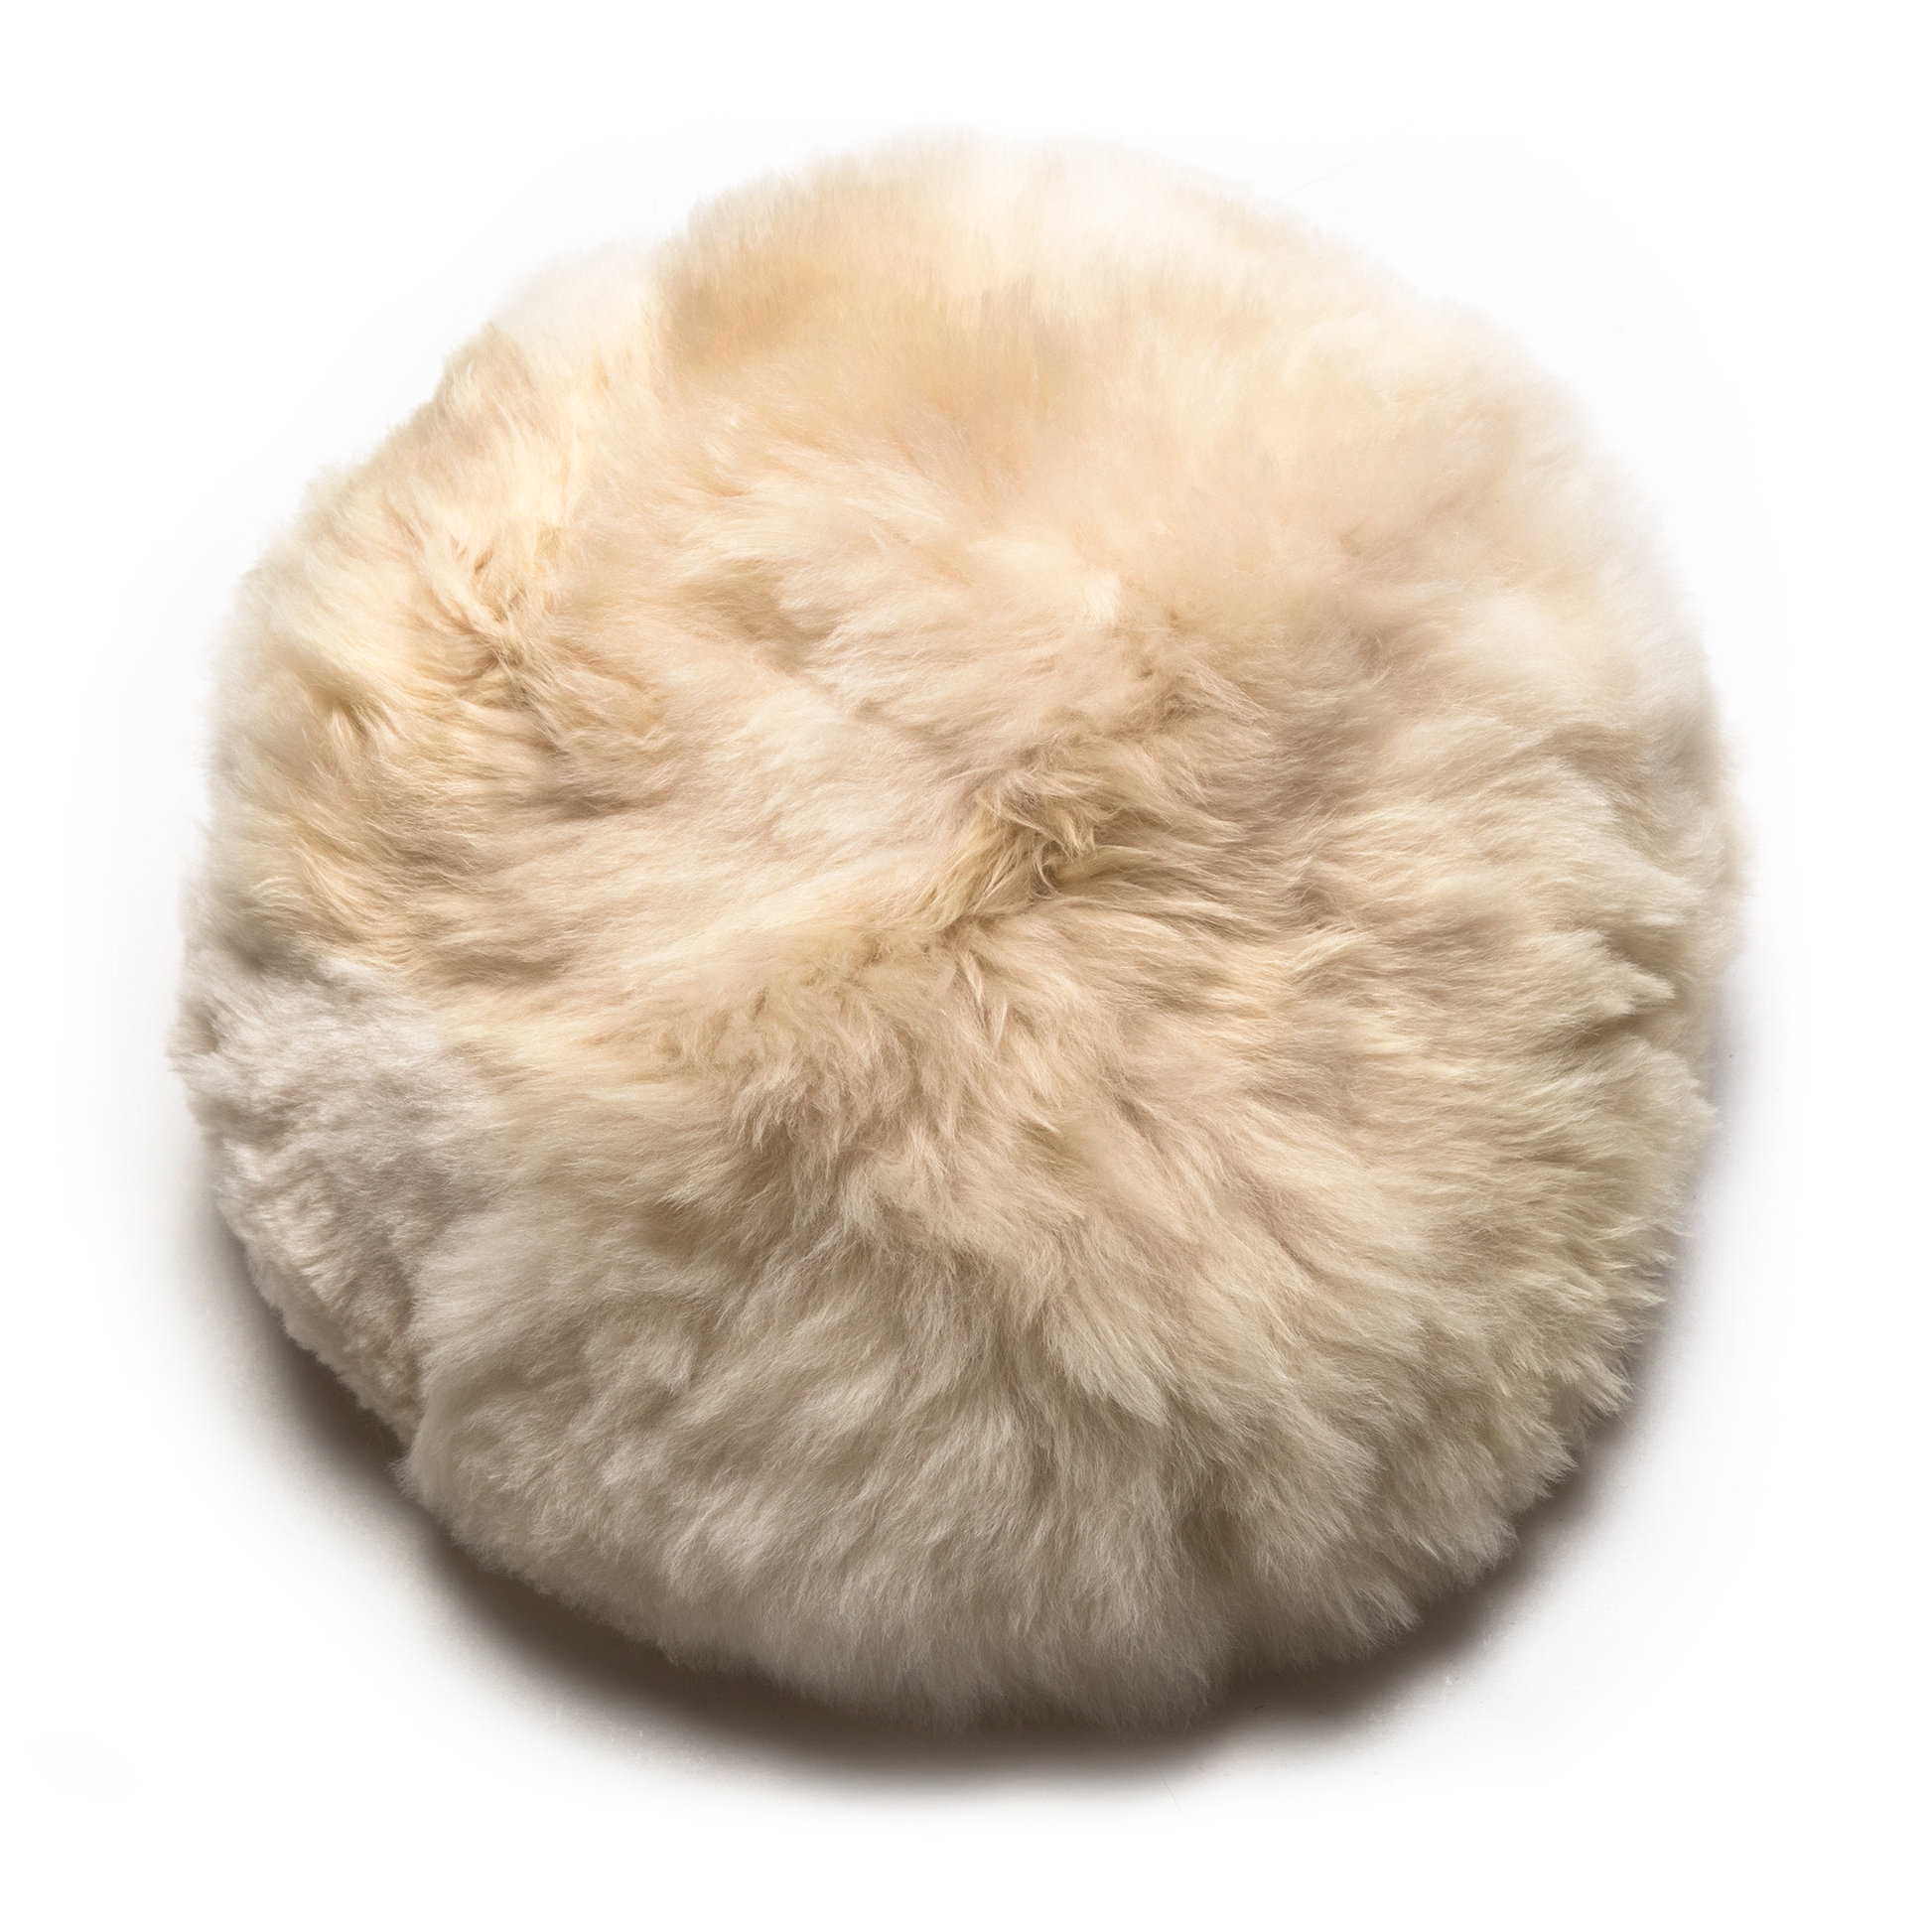 Intiearth alpaca fur round moon pillow in natural cream